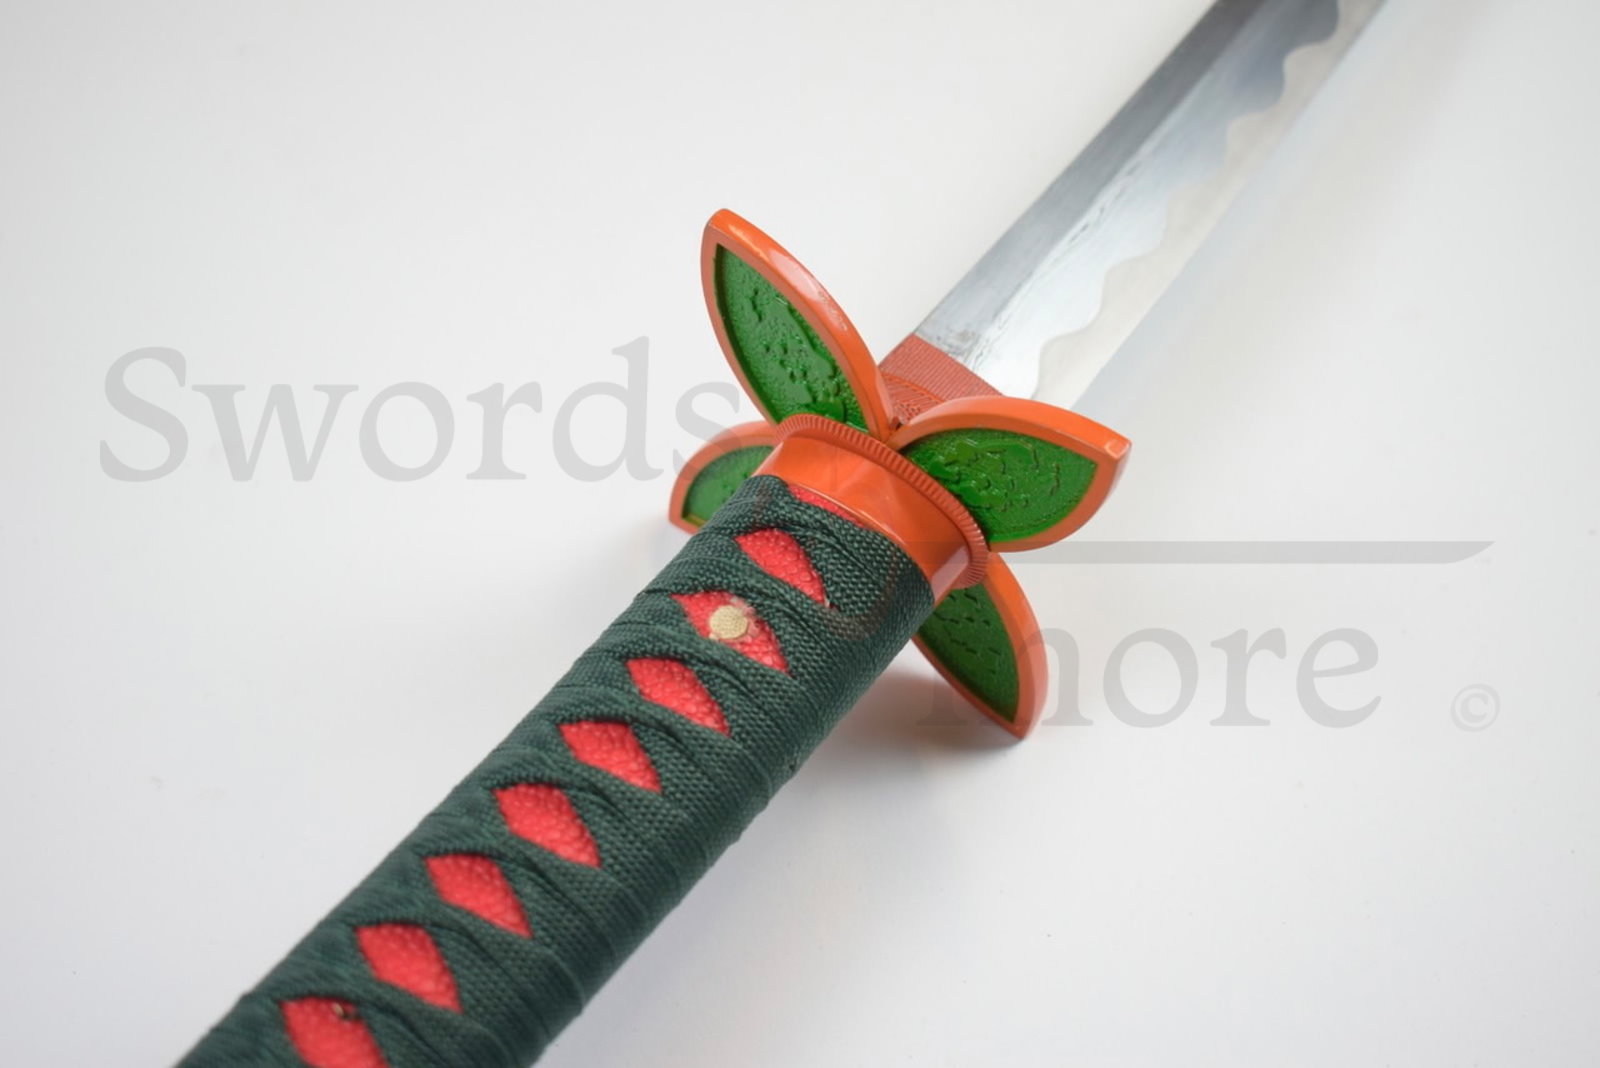 Demon Slayer: Kimetsu no Yaiba - Kochou Shinobu Schwert - handgeschmiedet und gefaltet, Set